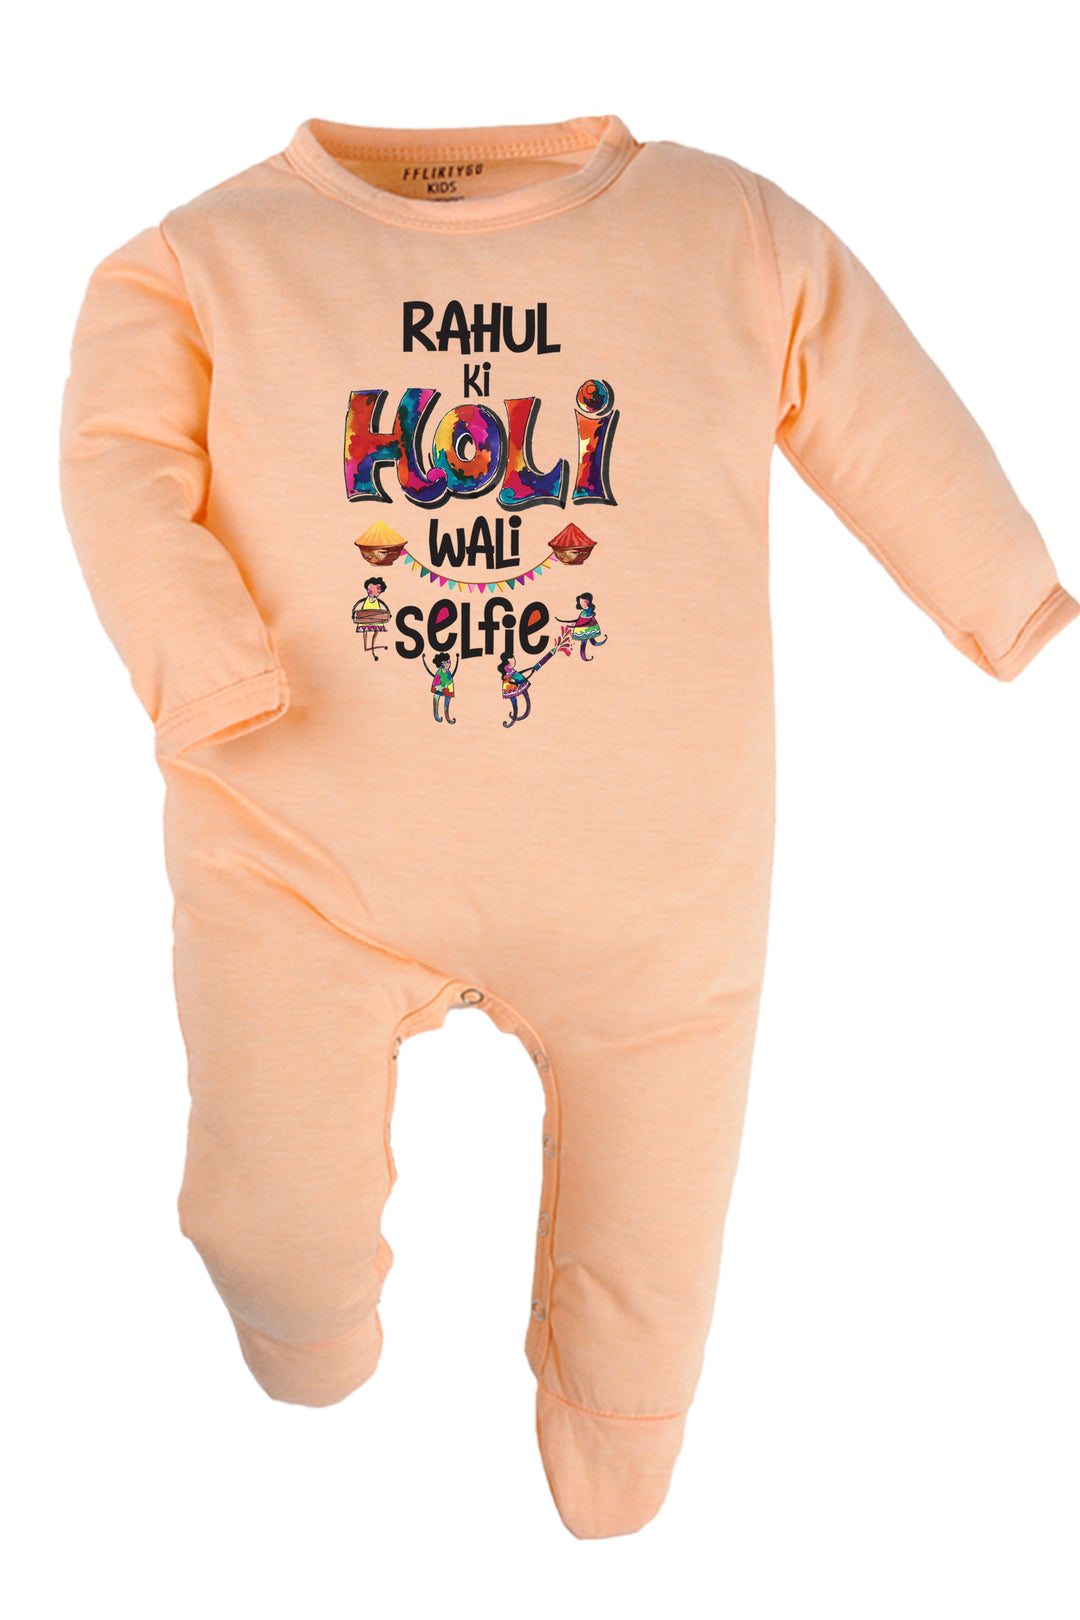 Holi Wali Selfie Baby Romper | Onesies w/ Custom Name